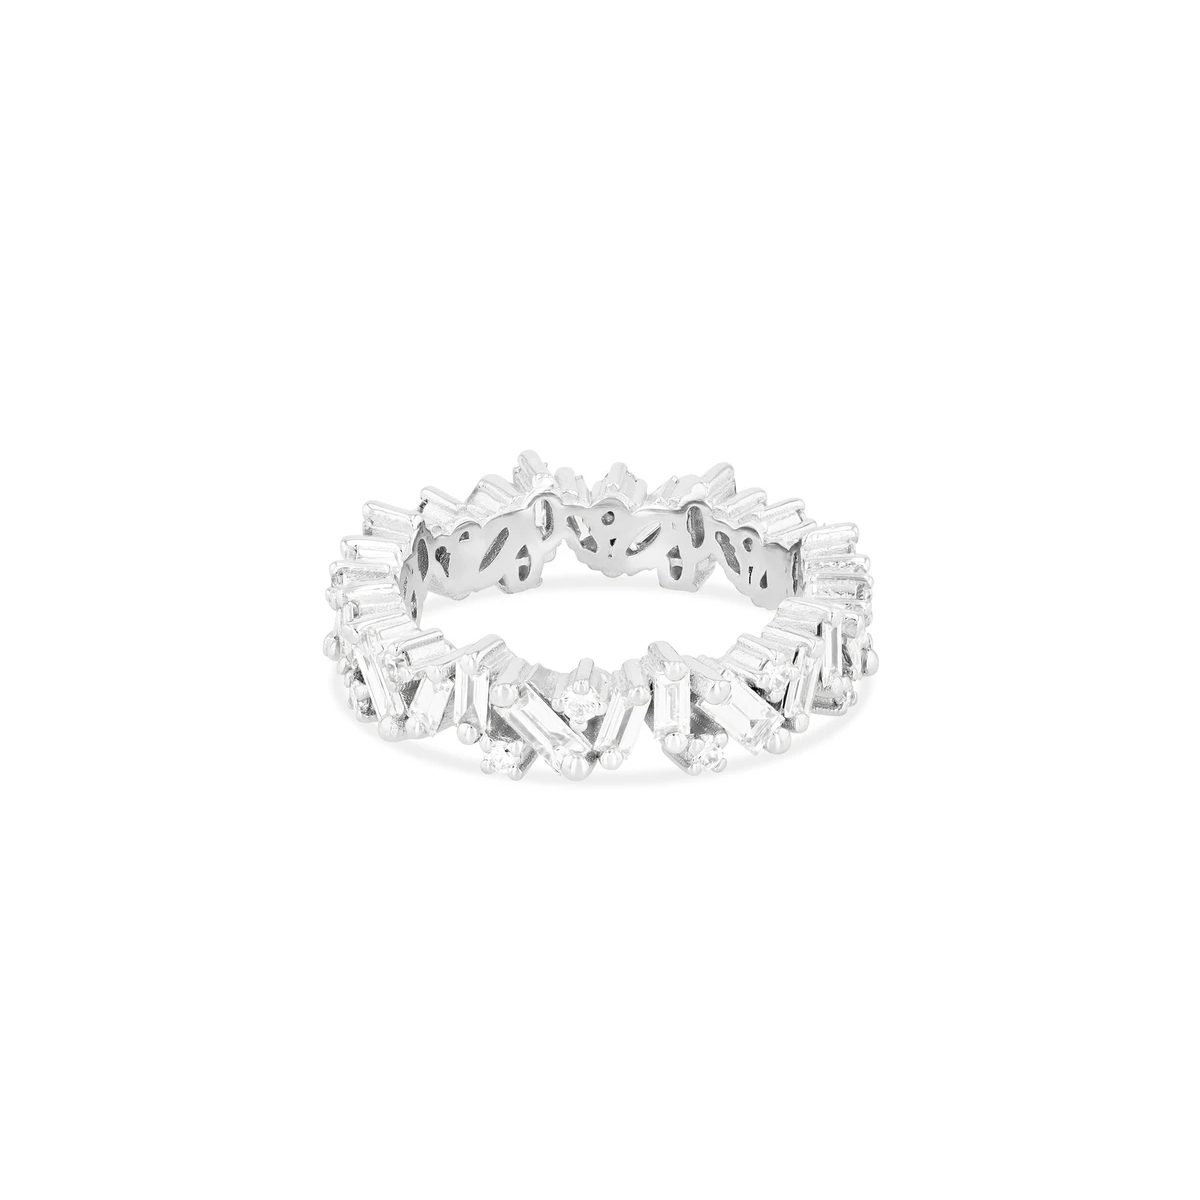 Marshall Pierce Chicago Fine Jewelry, Swiss Watches, Wedding Ring